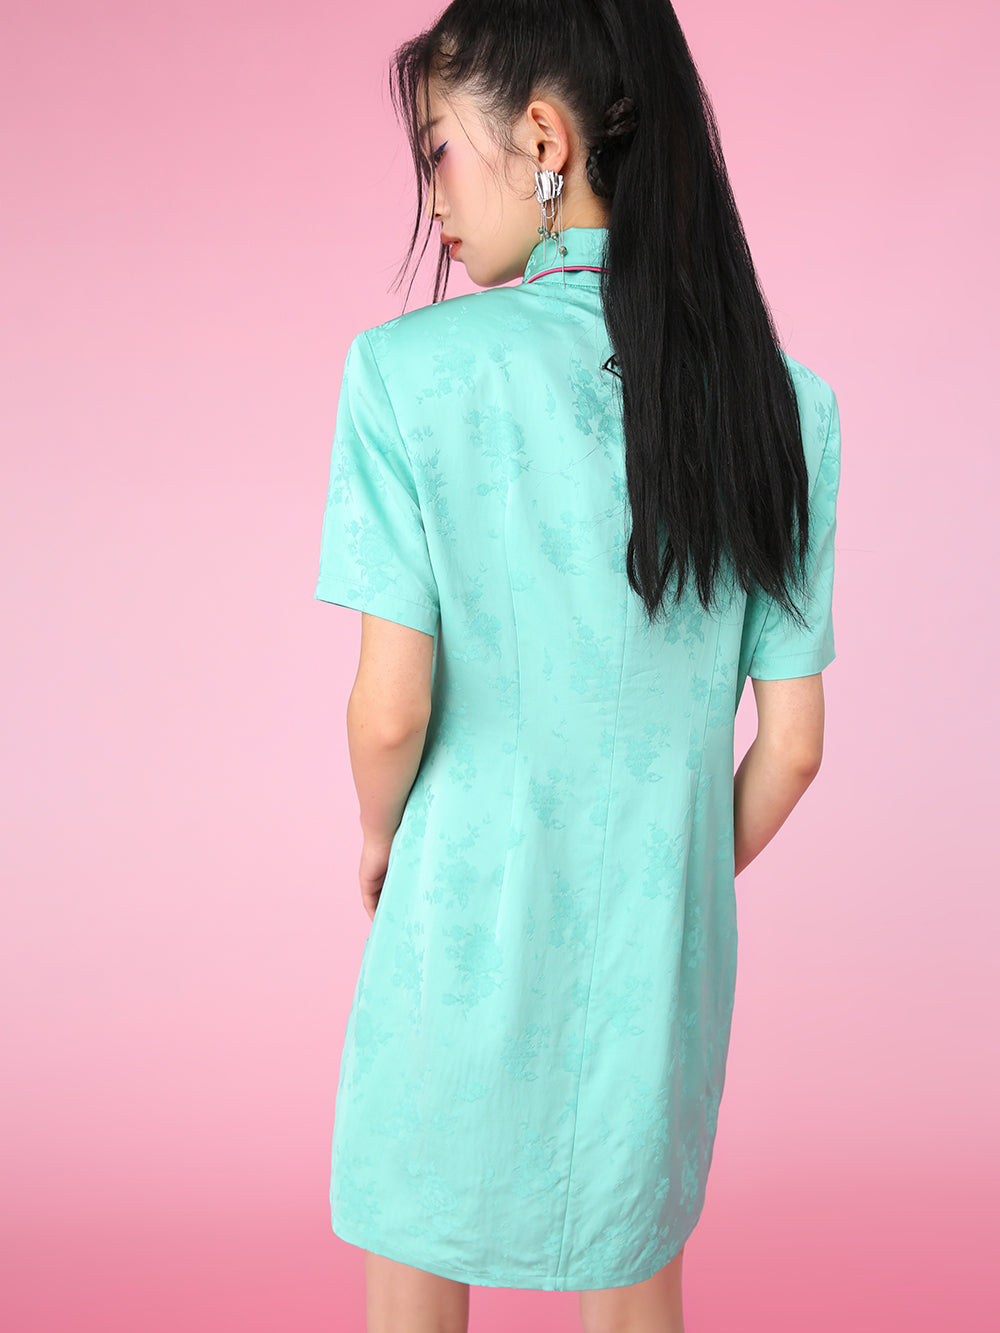 MUKZIN Cheongsam New Green Slim Dress Charming